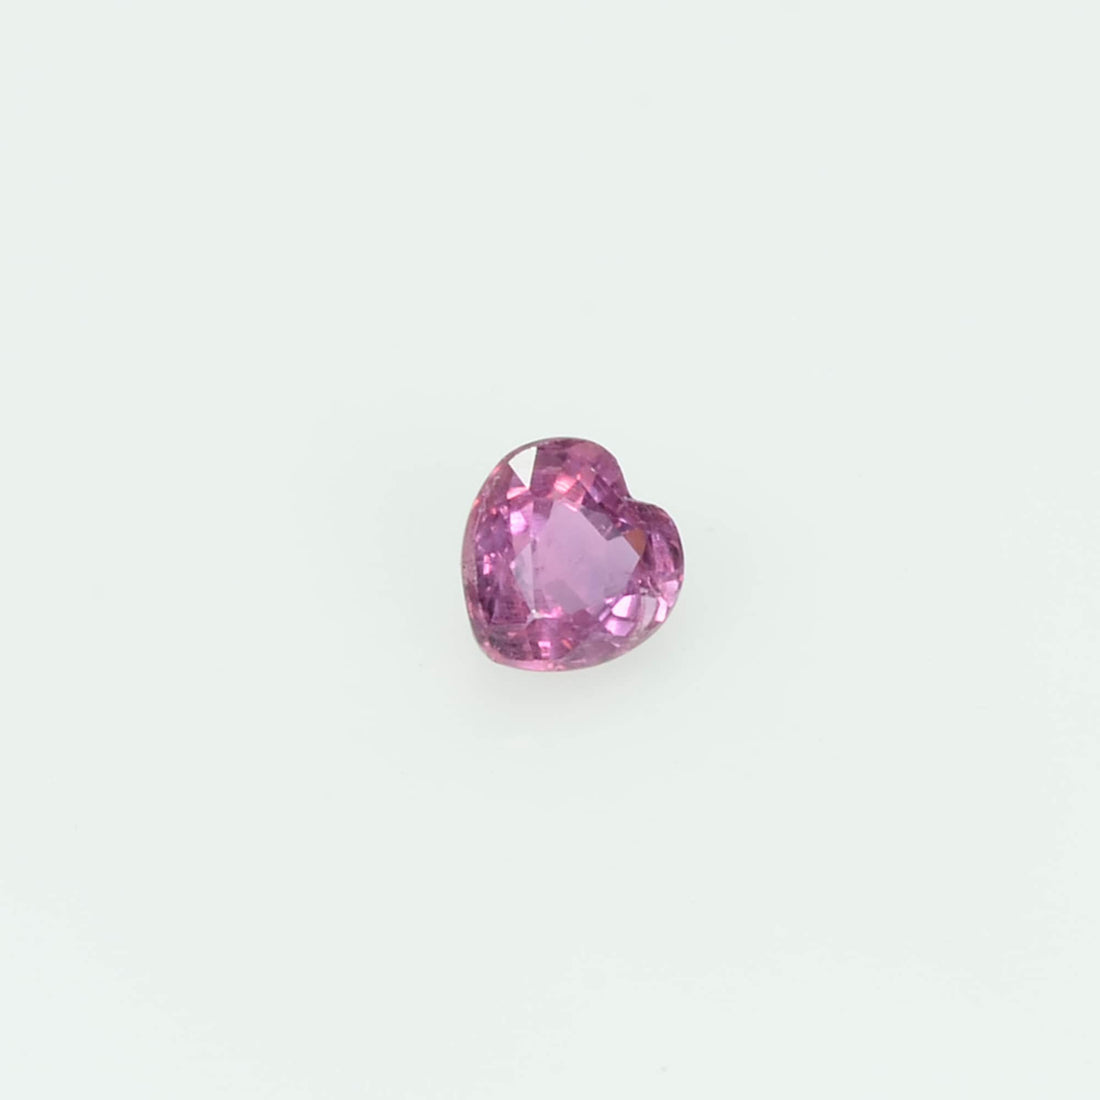 4 Mm Natural Ruby Loose Gemstone Heart Cut